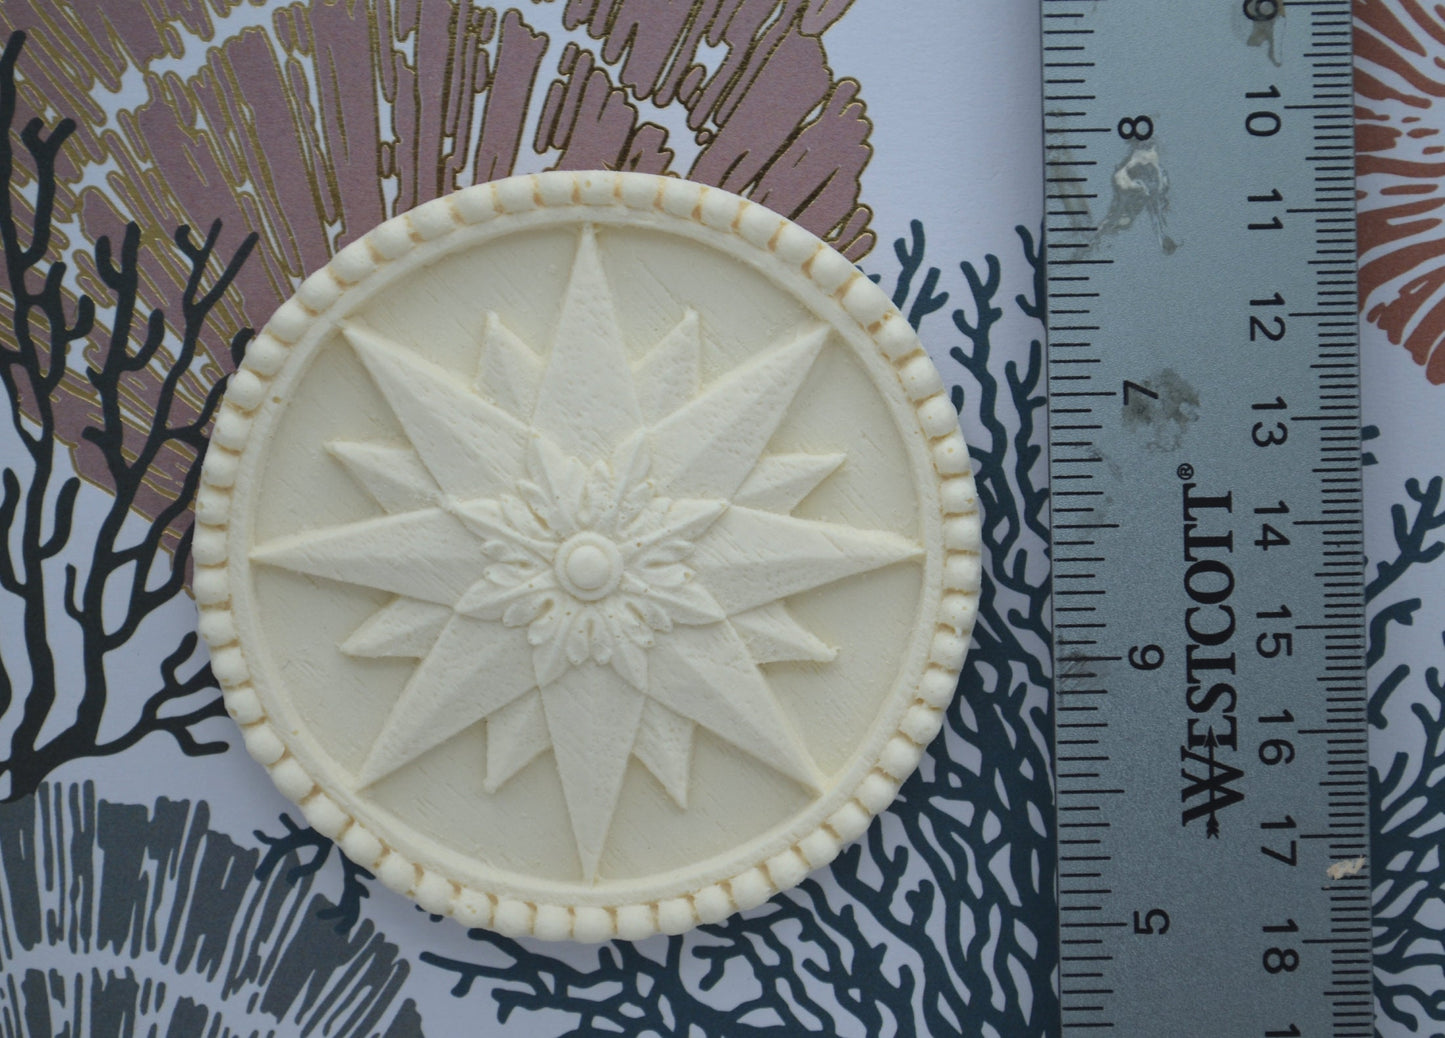 Snowflake Medallion | Miniature Ceiling Carving